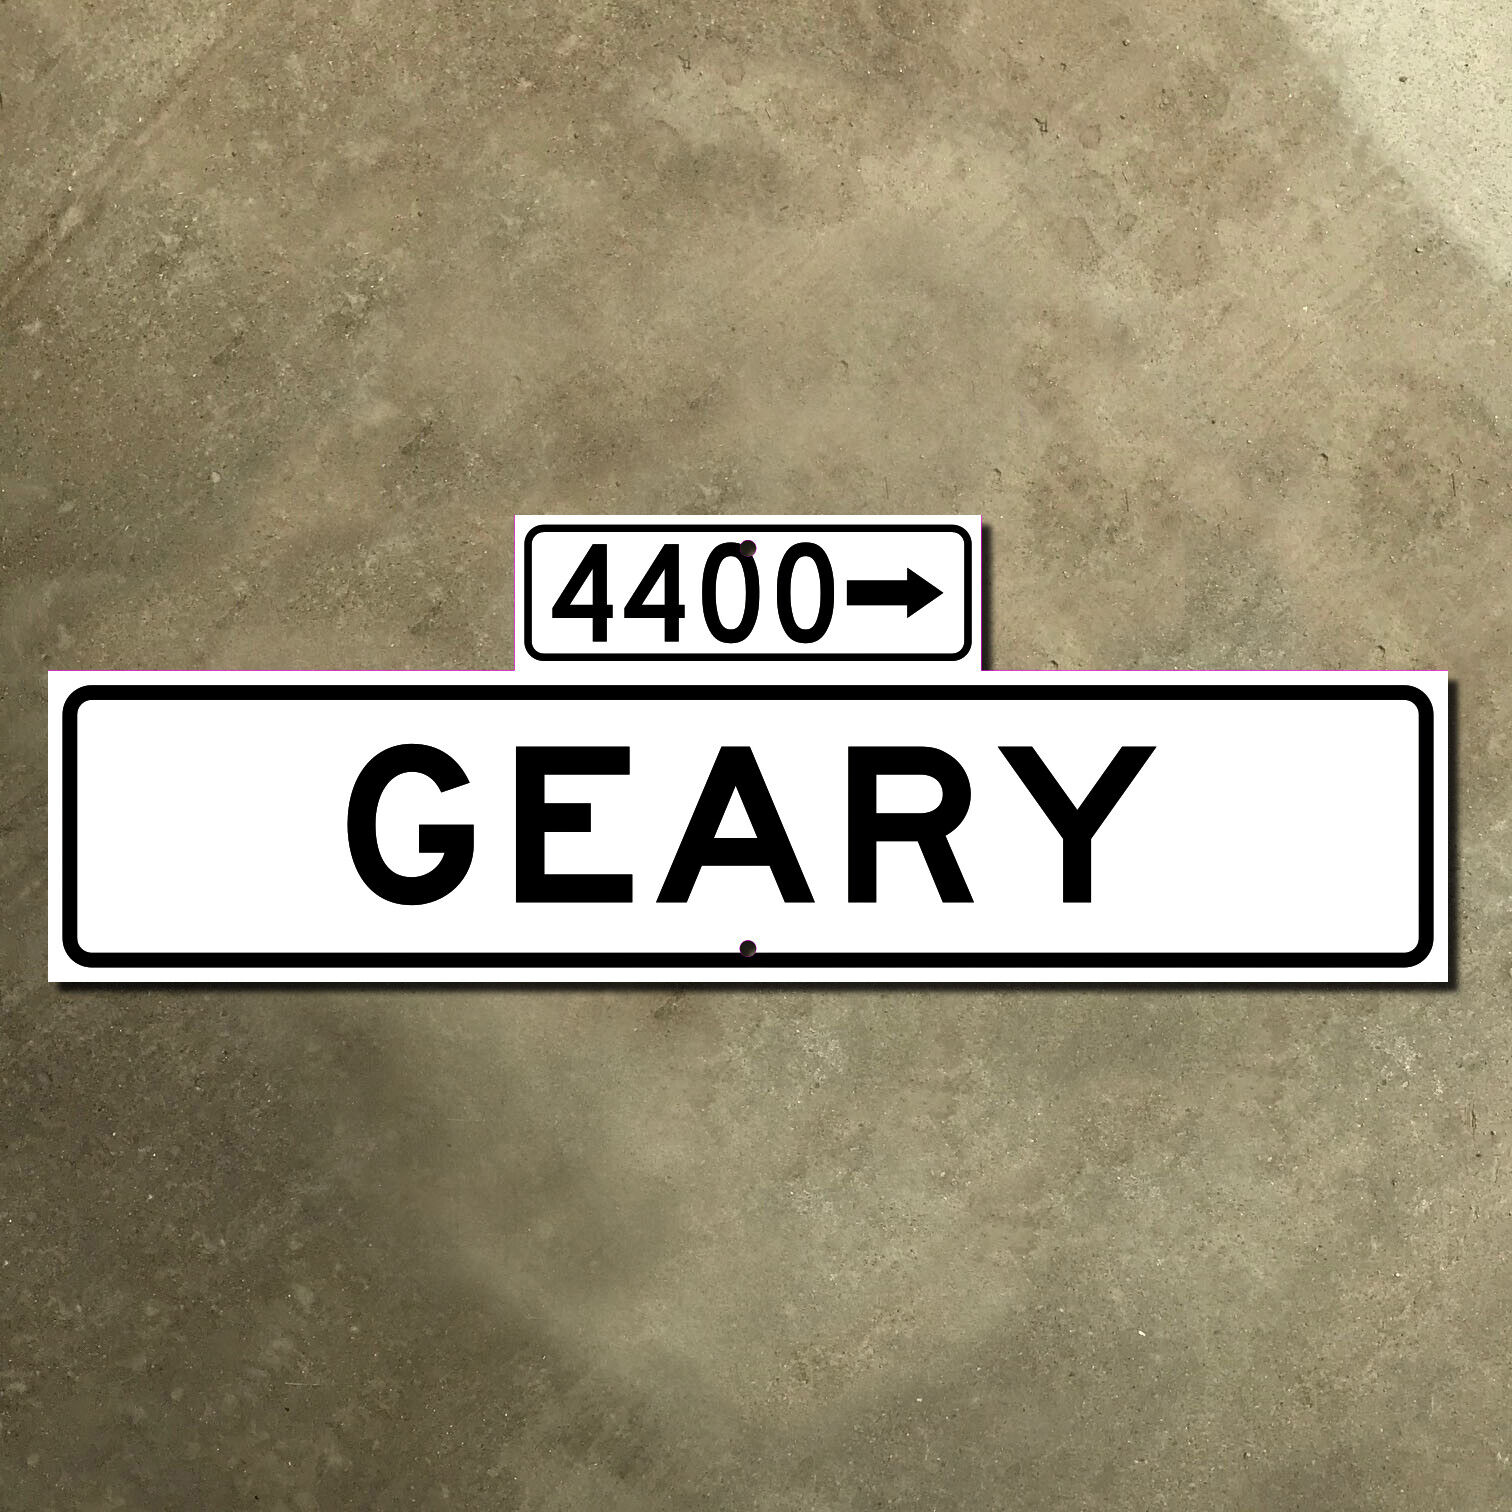 San Francisco California 4400 Geary Blvd street blade 1965 road sign 36x12